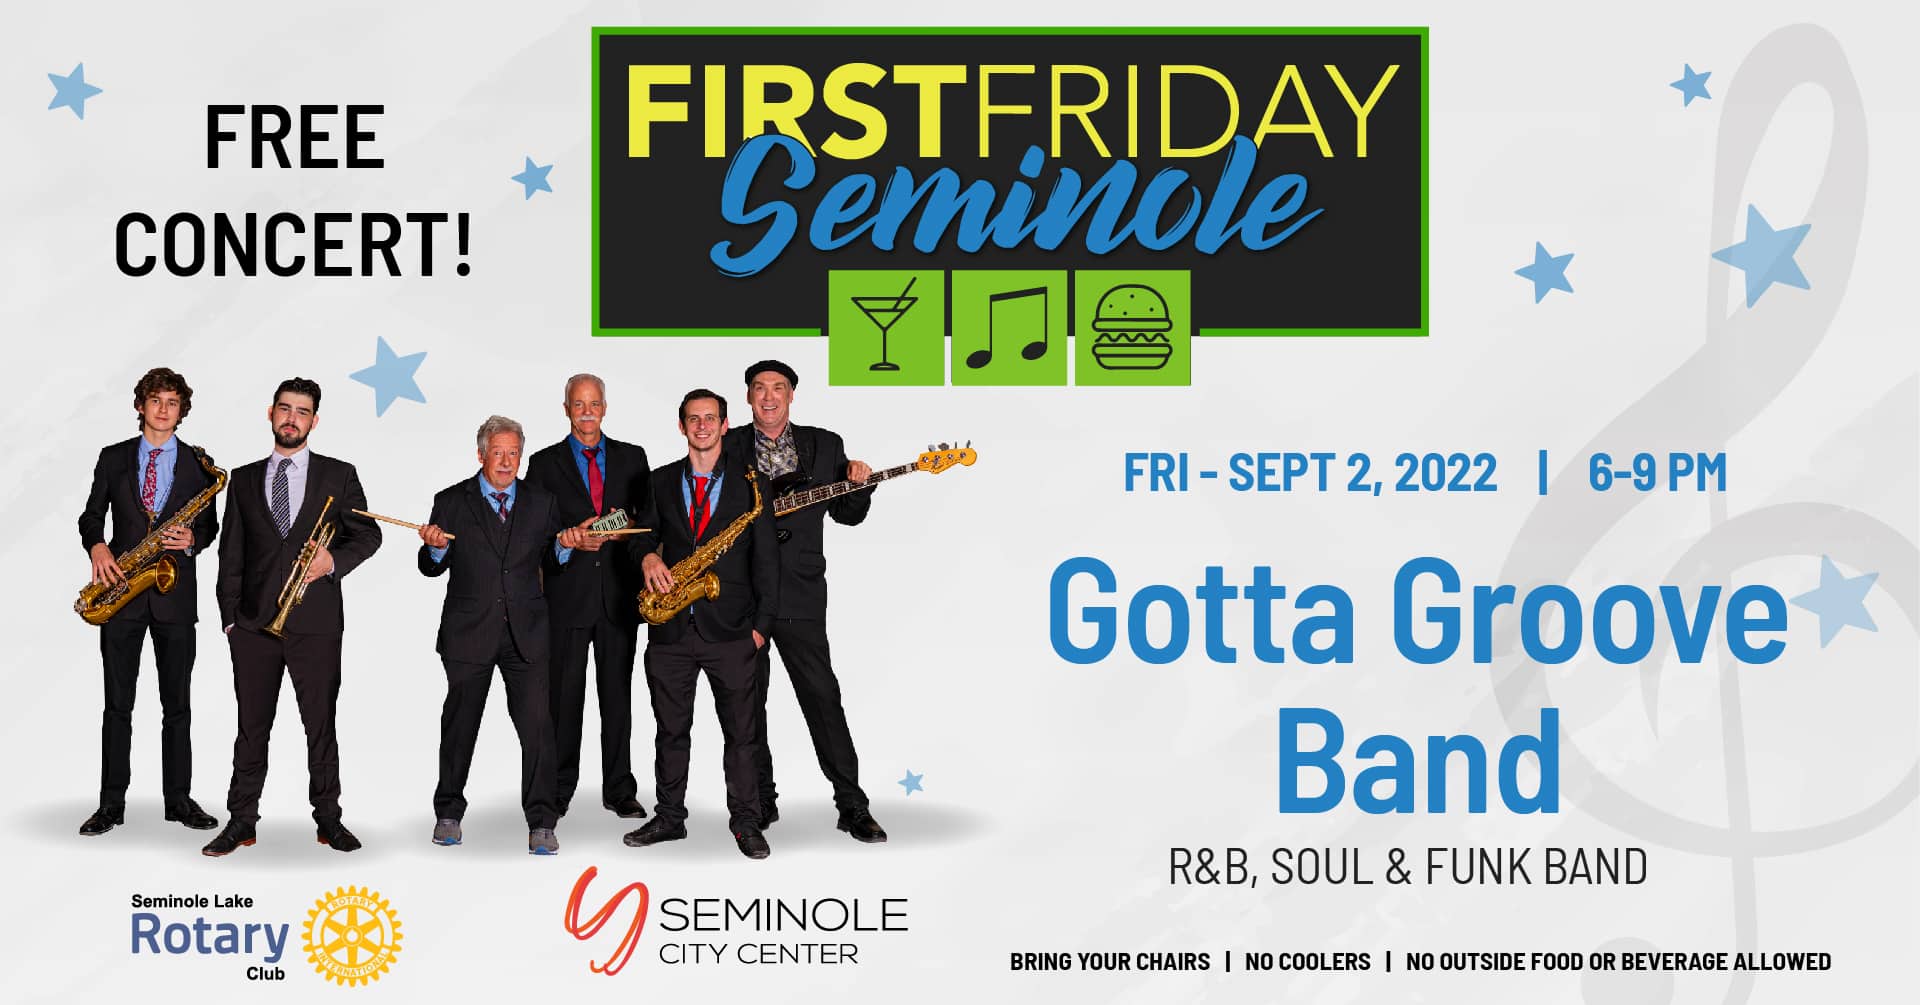 First Friday Seminole Gotta Groove Seminole City Center